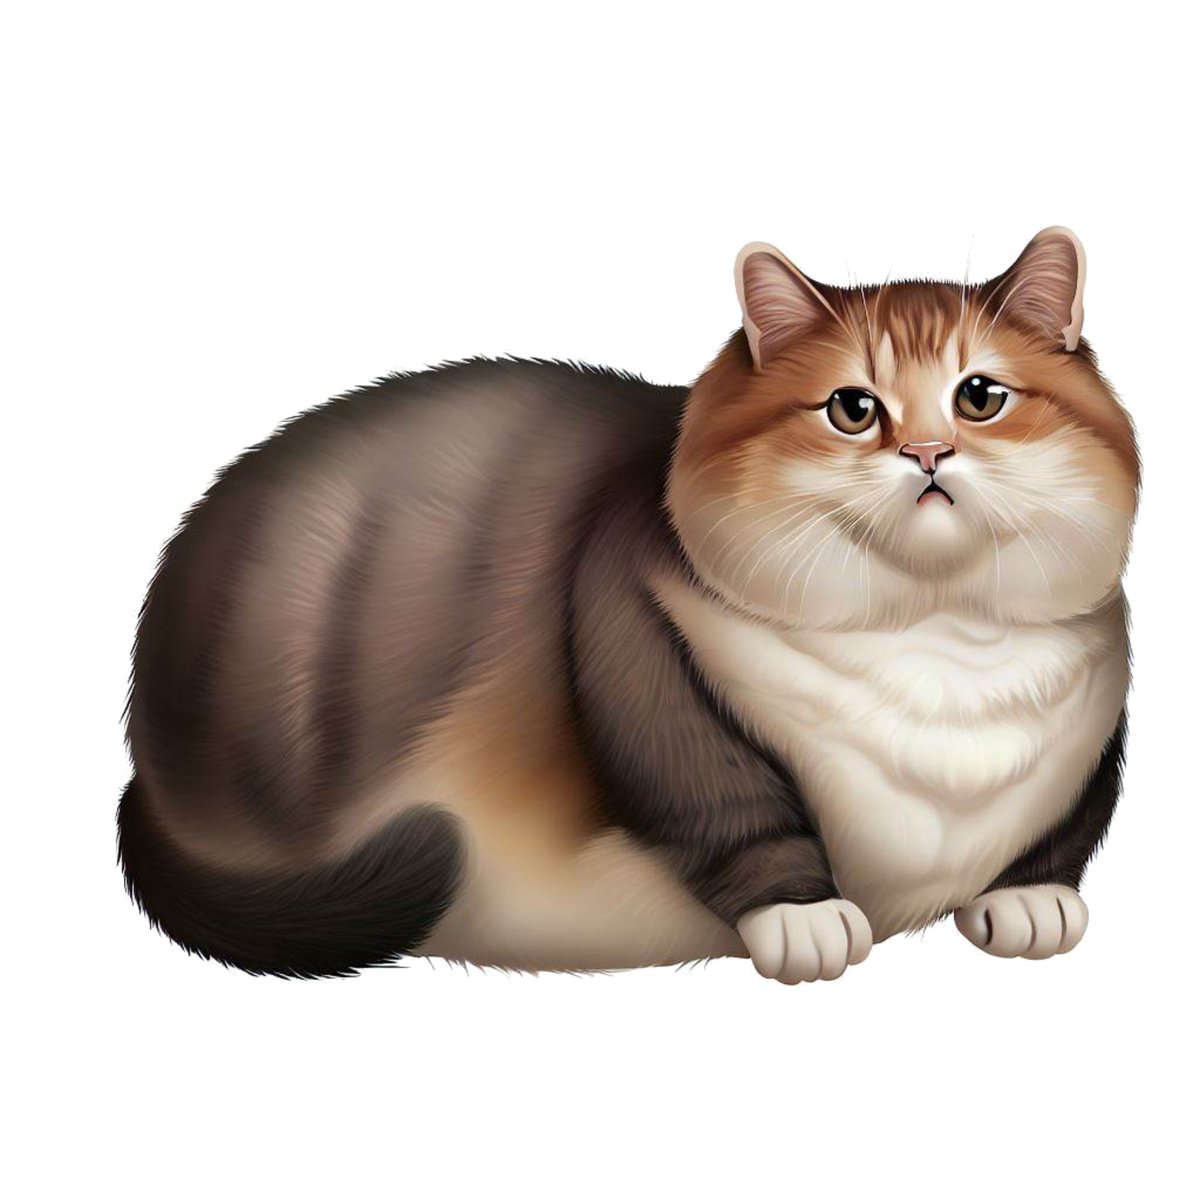 100 FAT CAT SET LİNK:
vanzzidigital.etsy.com

#CatsofTwittter #ilustration #illustrations #junkjournals #journals #etsyshop #kids #tshirt #tshirtdesign #CatsOnTwitter